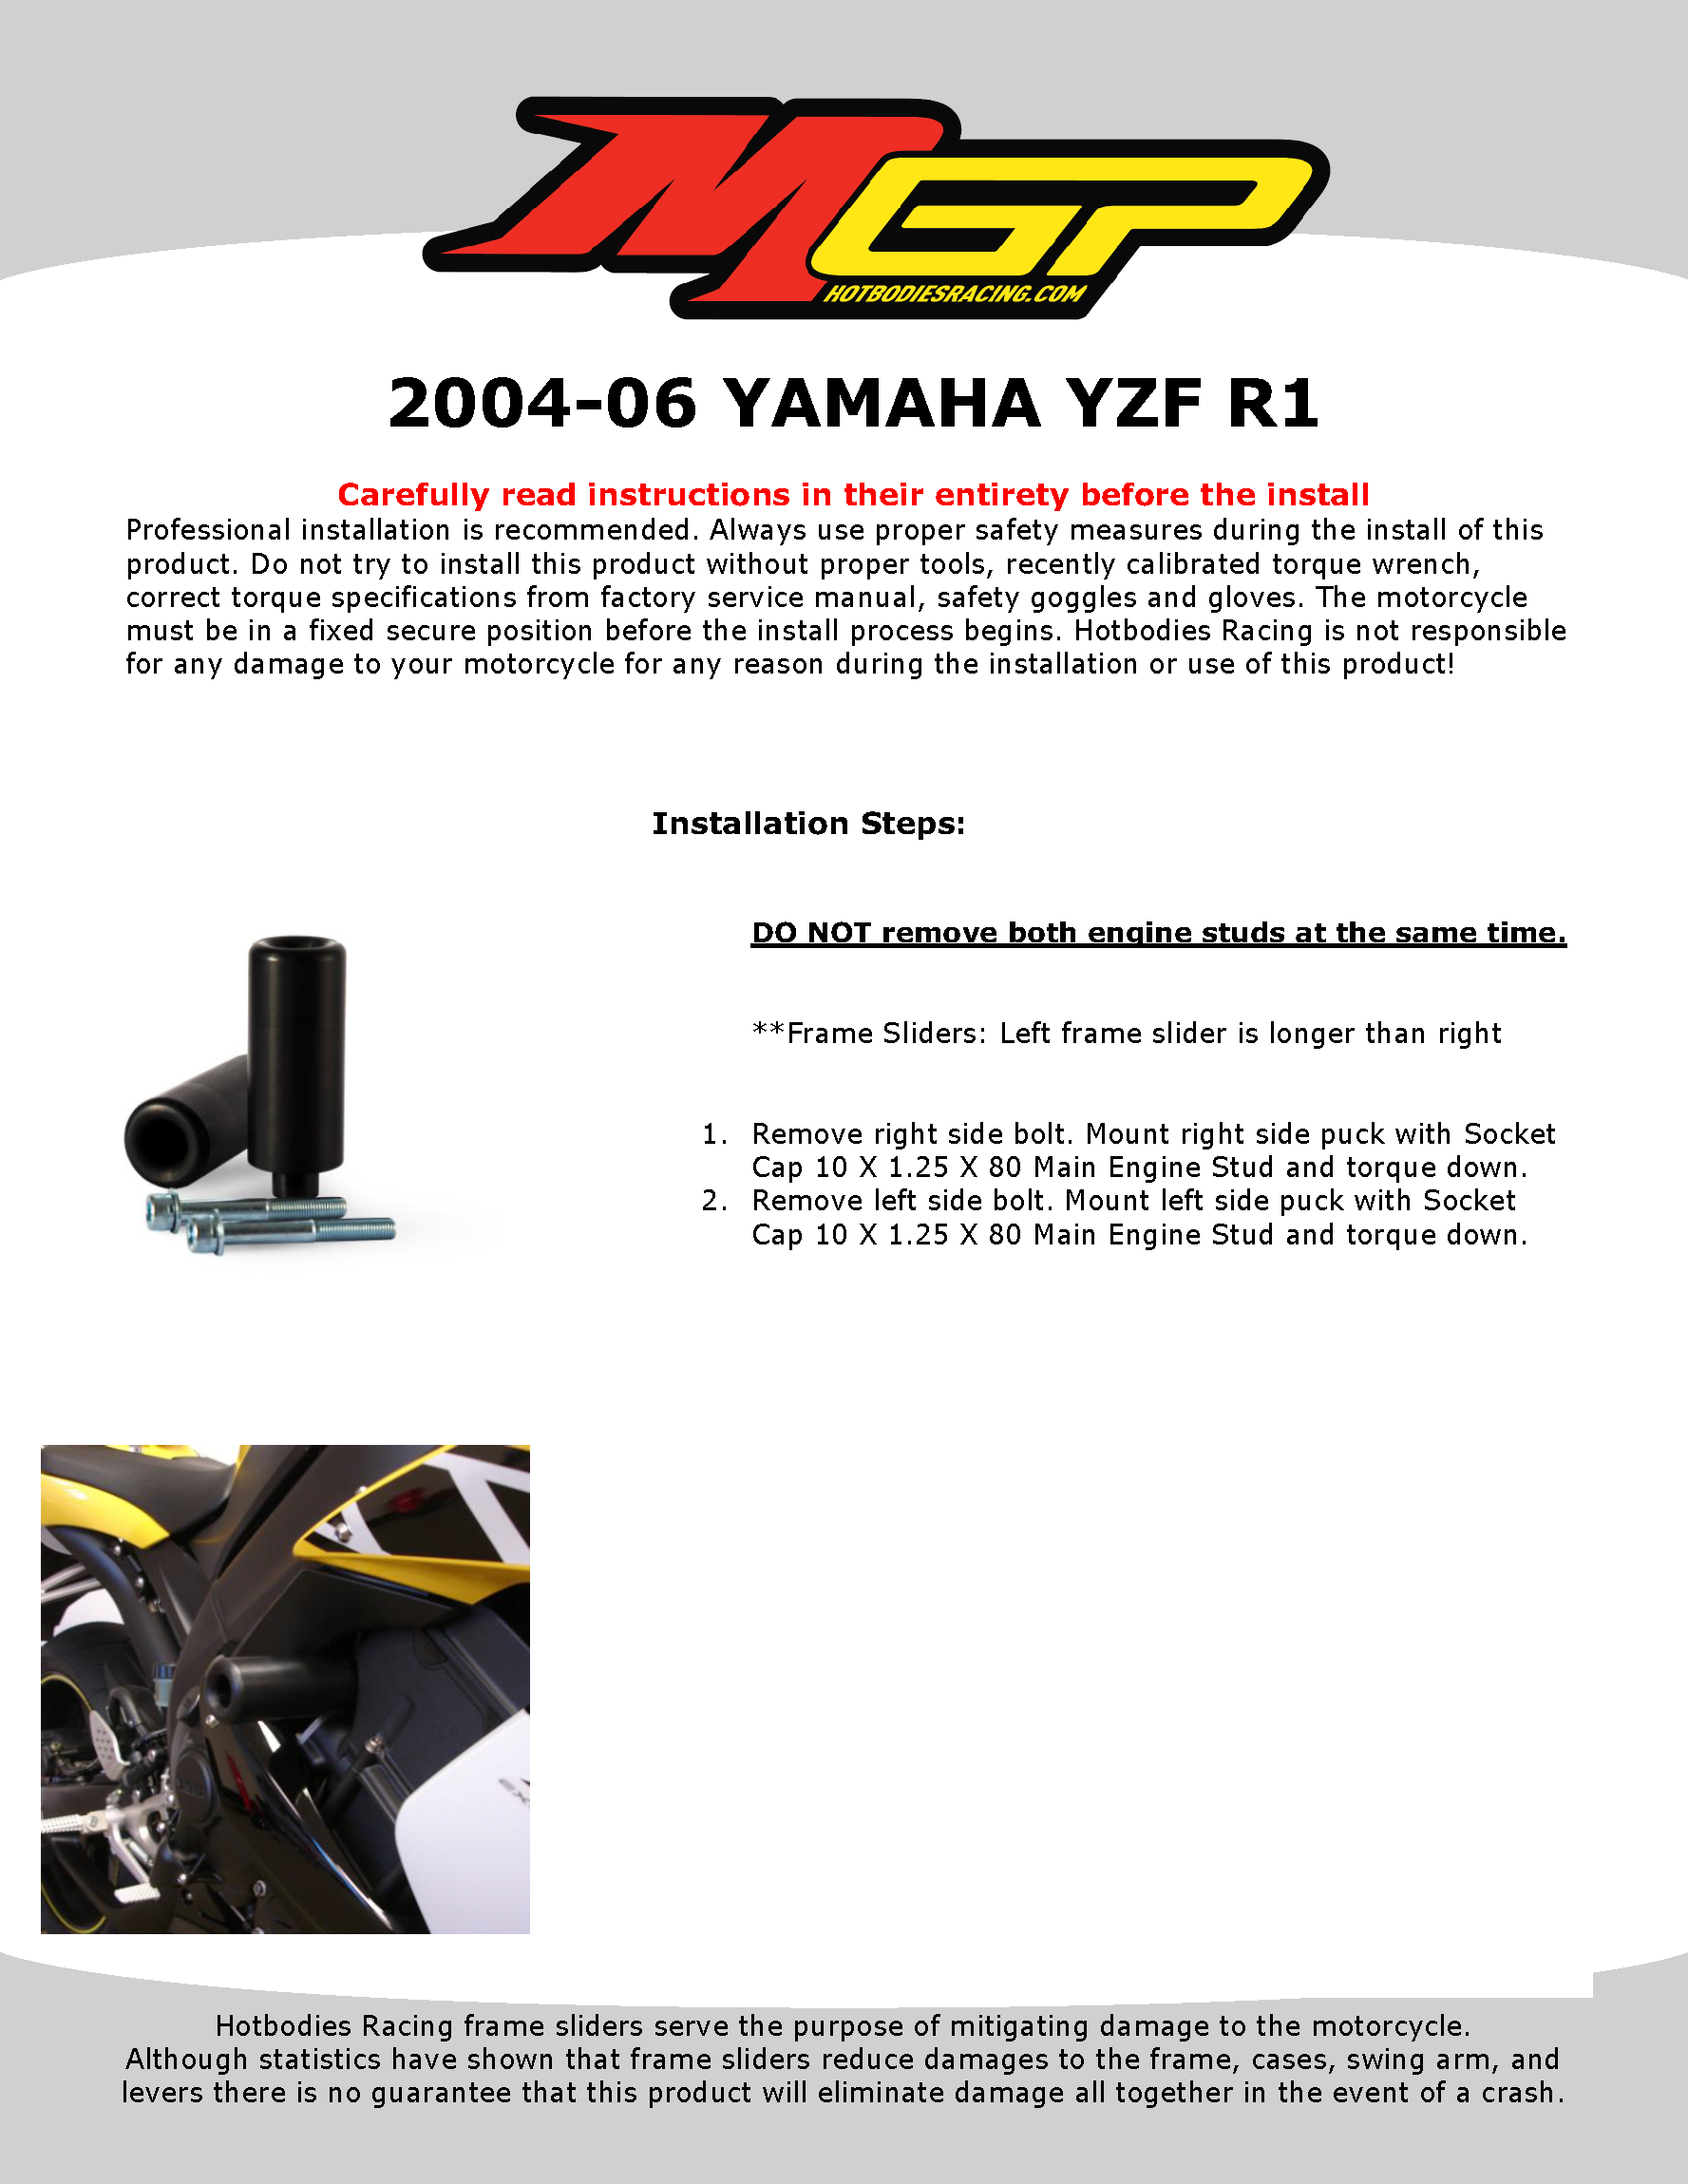 

2004-06 YAMAHA YZF R1 Installation

